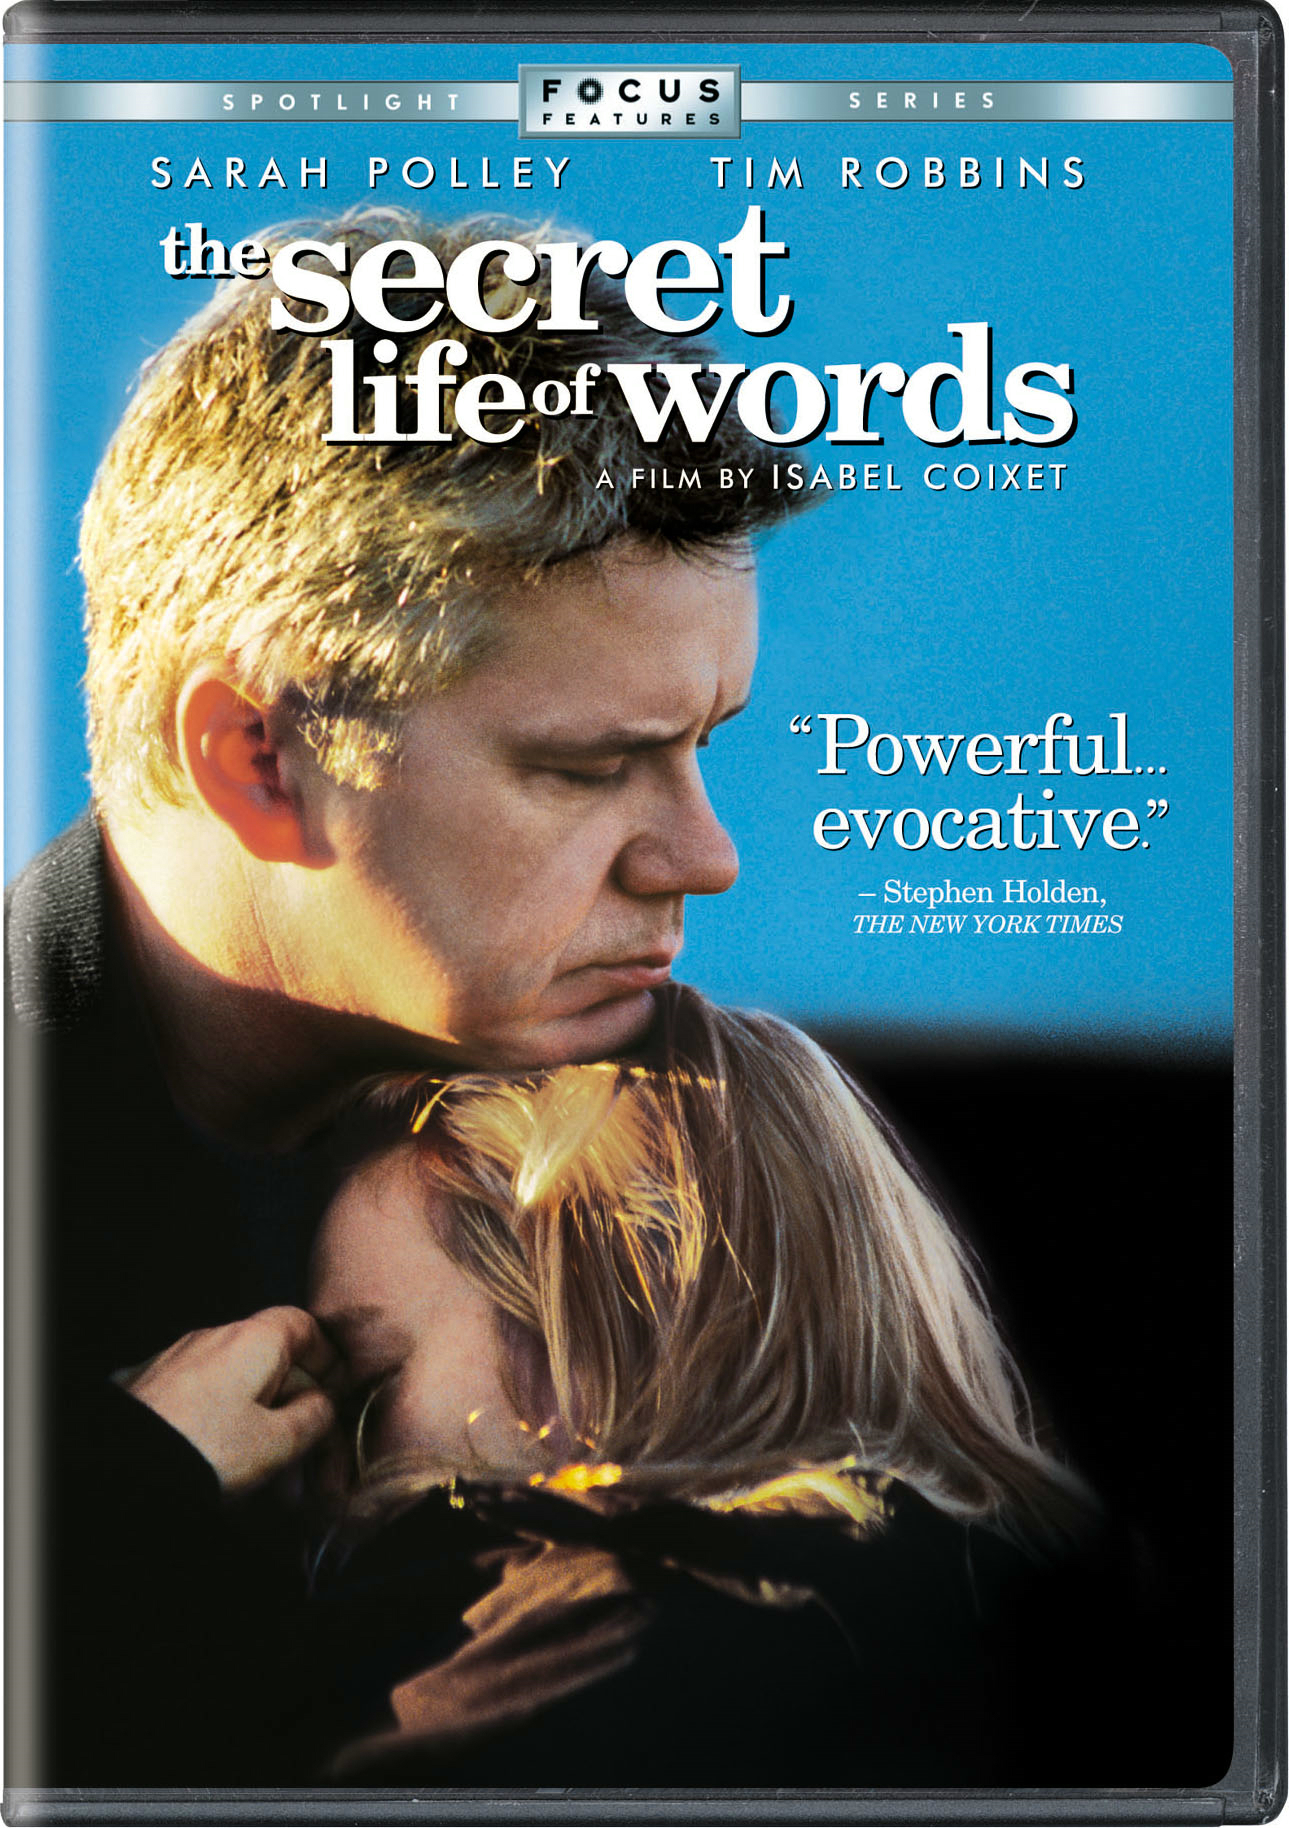 The Secret Life Of Words (DVD Widescreen Spotlight Series) - DVD [ 2006 ]  - Drama Movies On DVD - Movies On GRUV